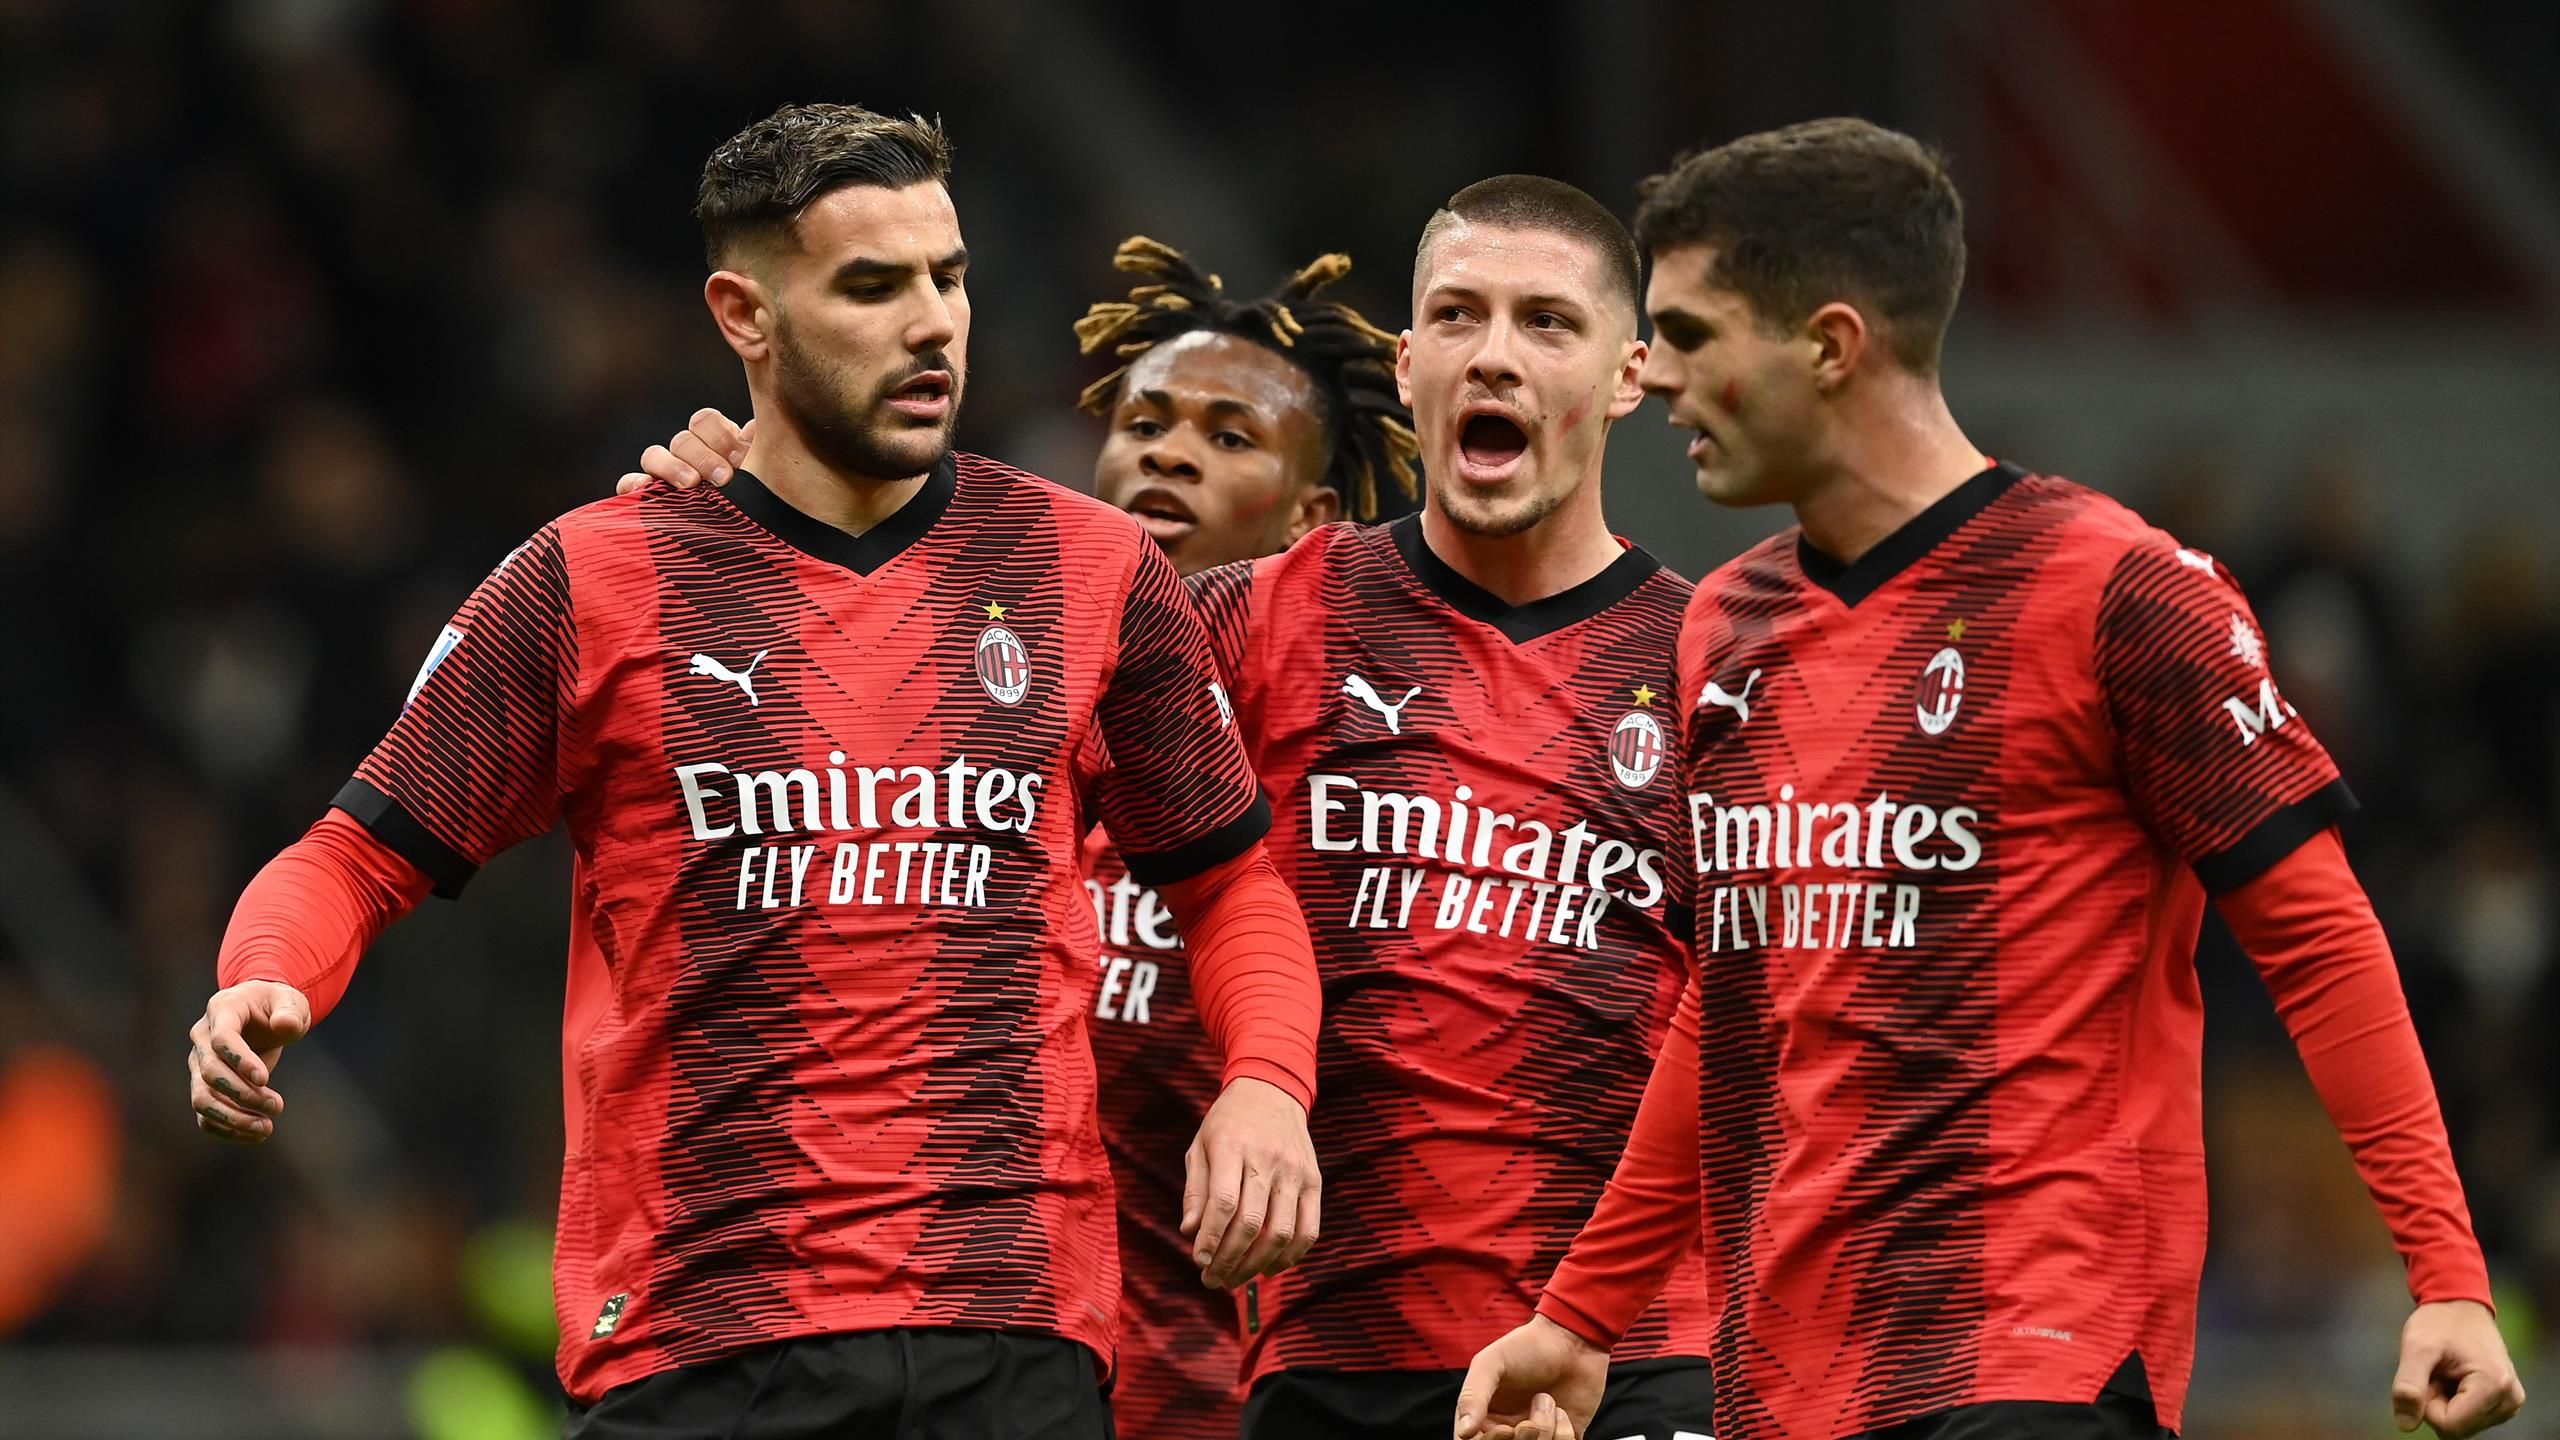 Player Ratings: Fiorentina 2-1 AC Milan - defence exposed; Maignan